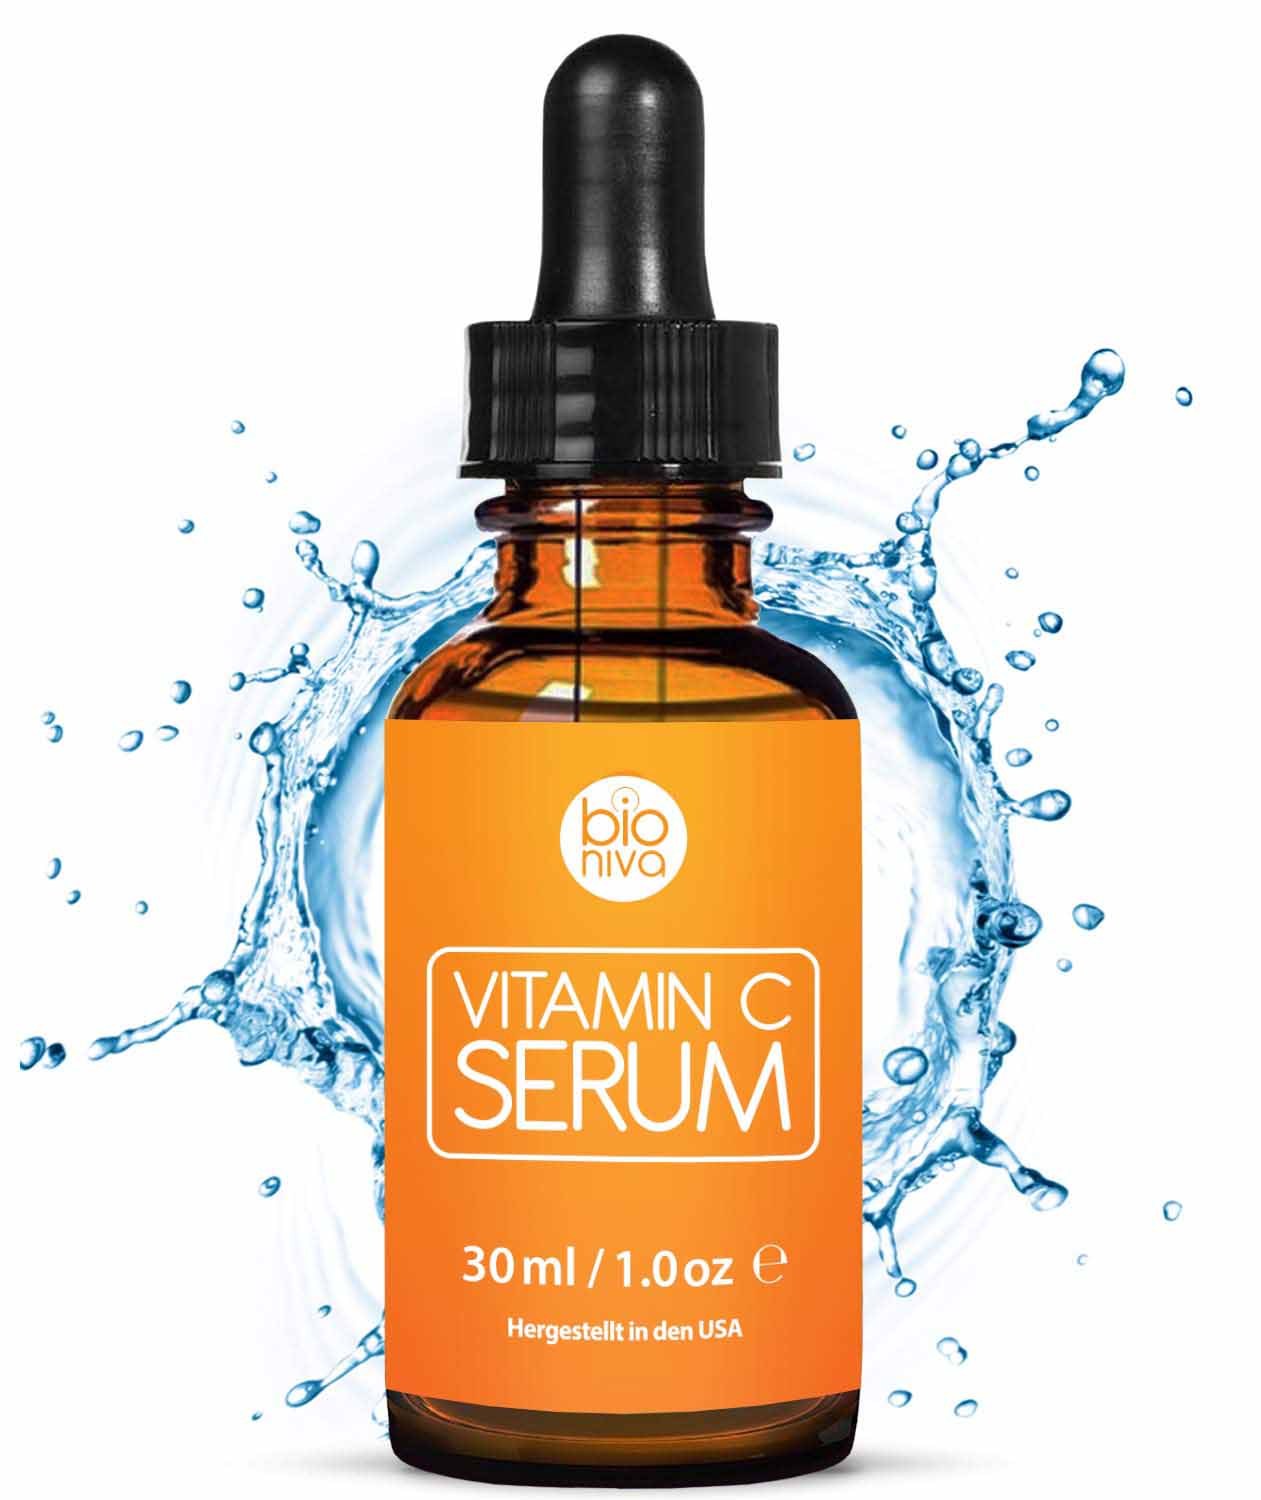 Vitamin C Serum - Wir-testen-Kosmetik